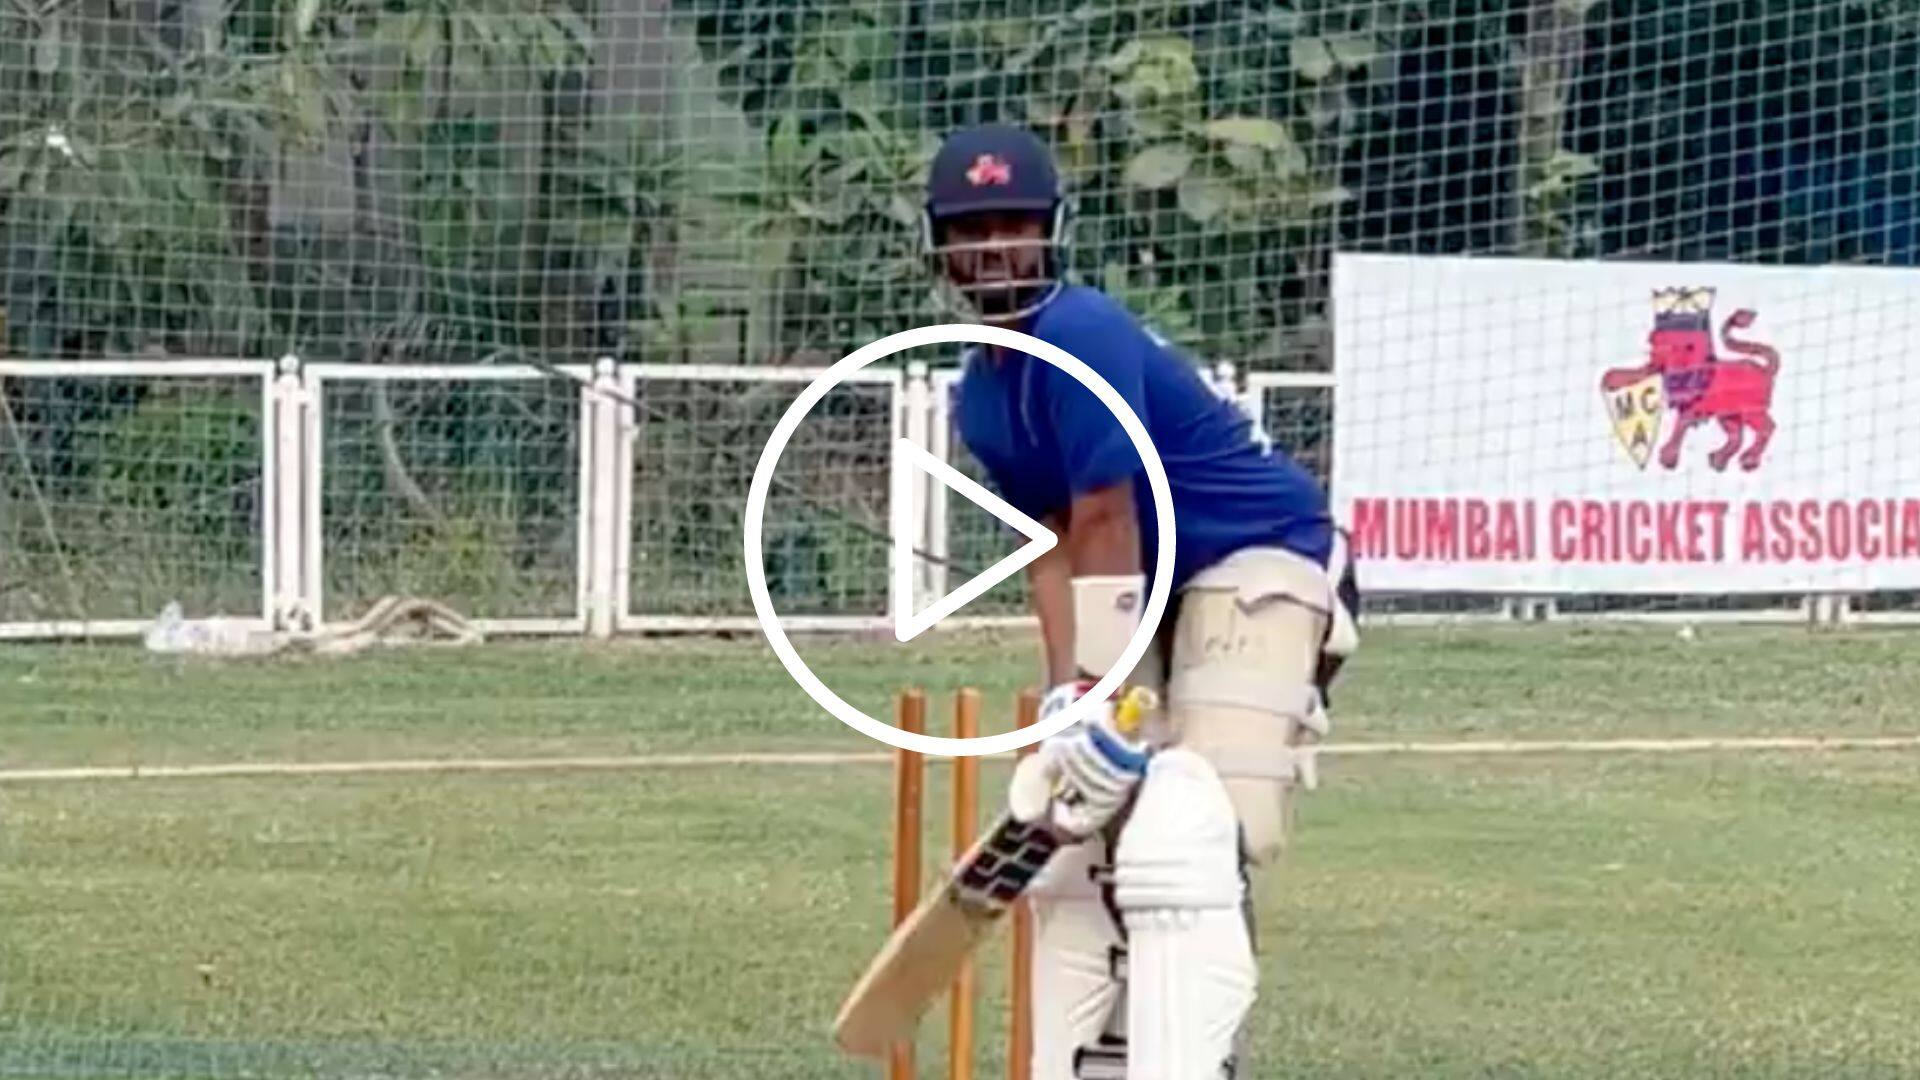 [Watch] Ajinkya Rahane Has Intense Batting Session After India's Embarrassing Centurion Loss